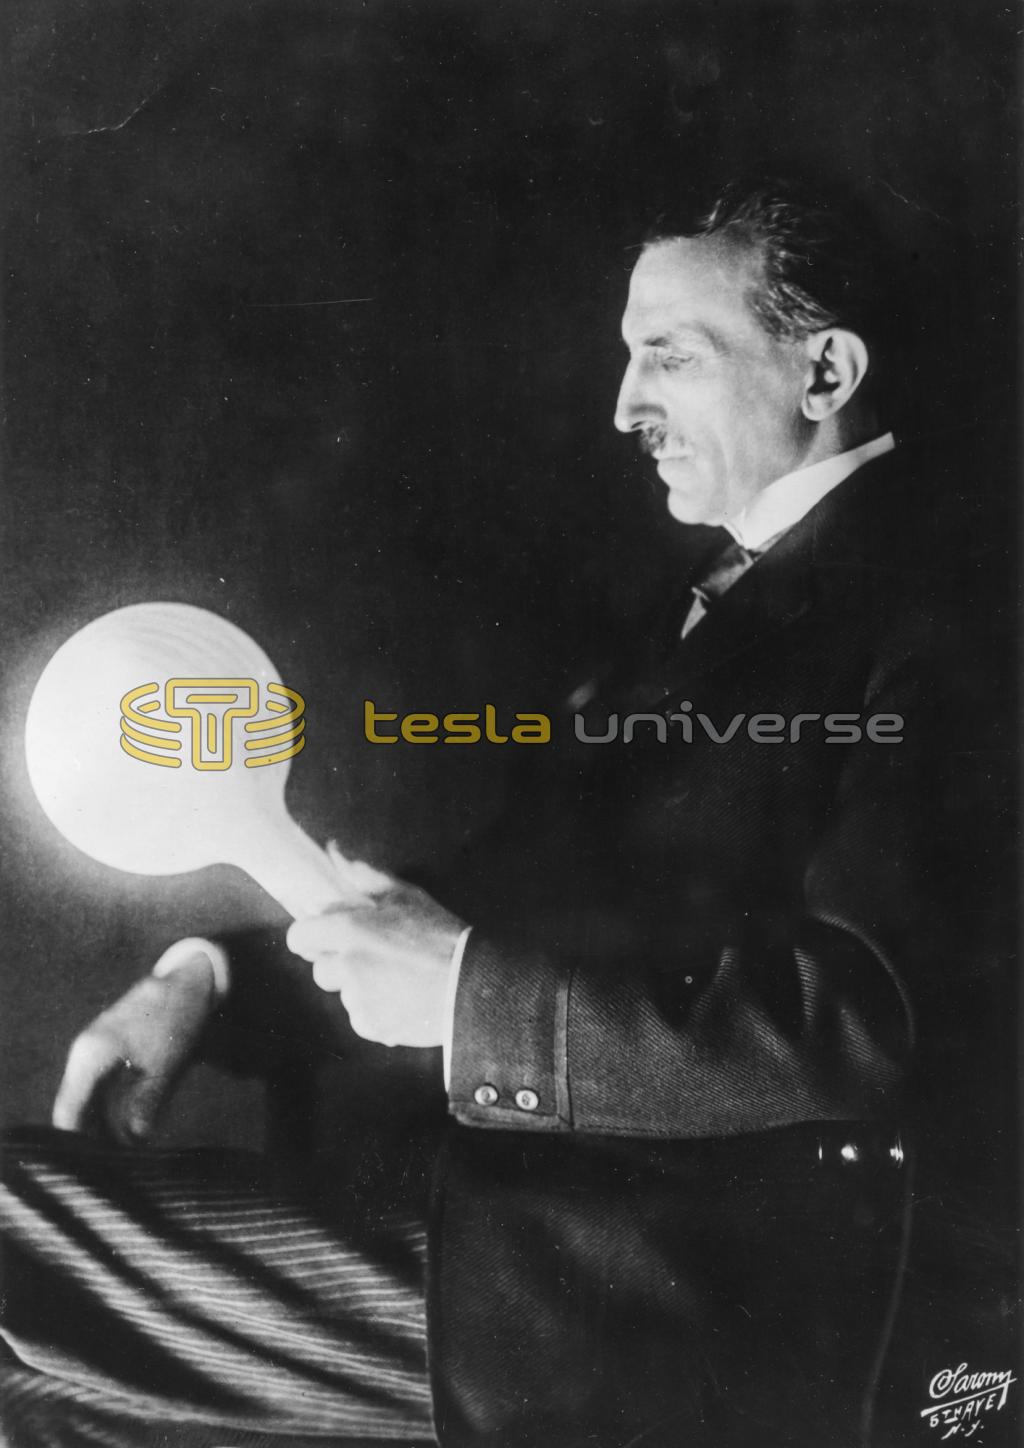 Nikola Tesla holding filamentless bulb lit by wireless power